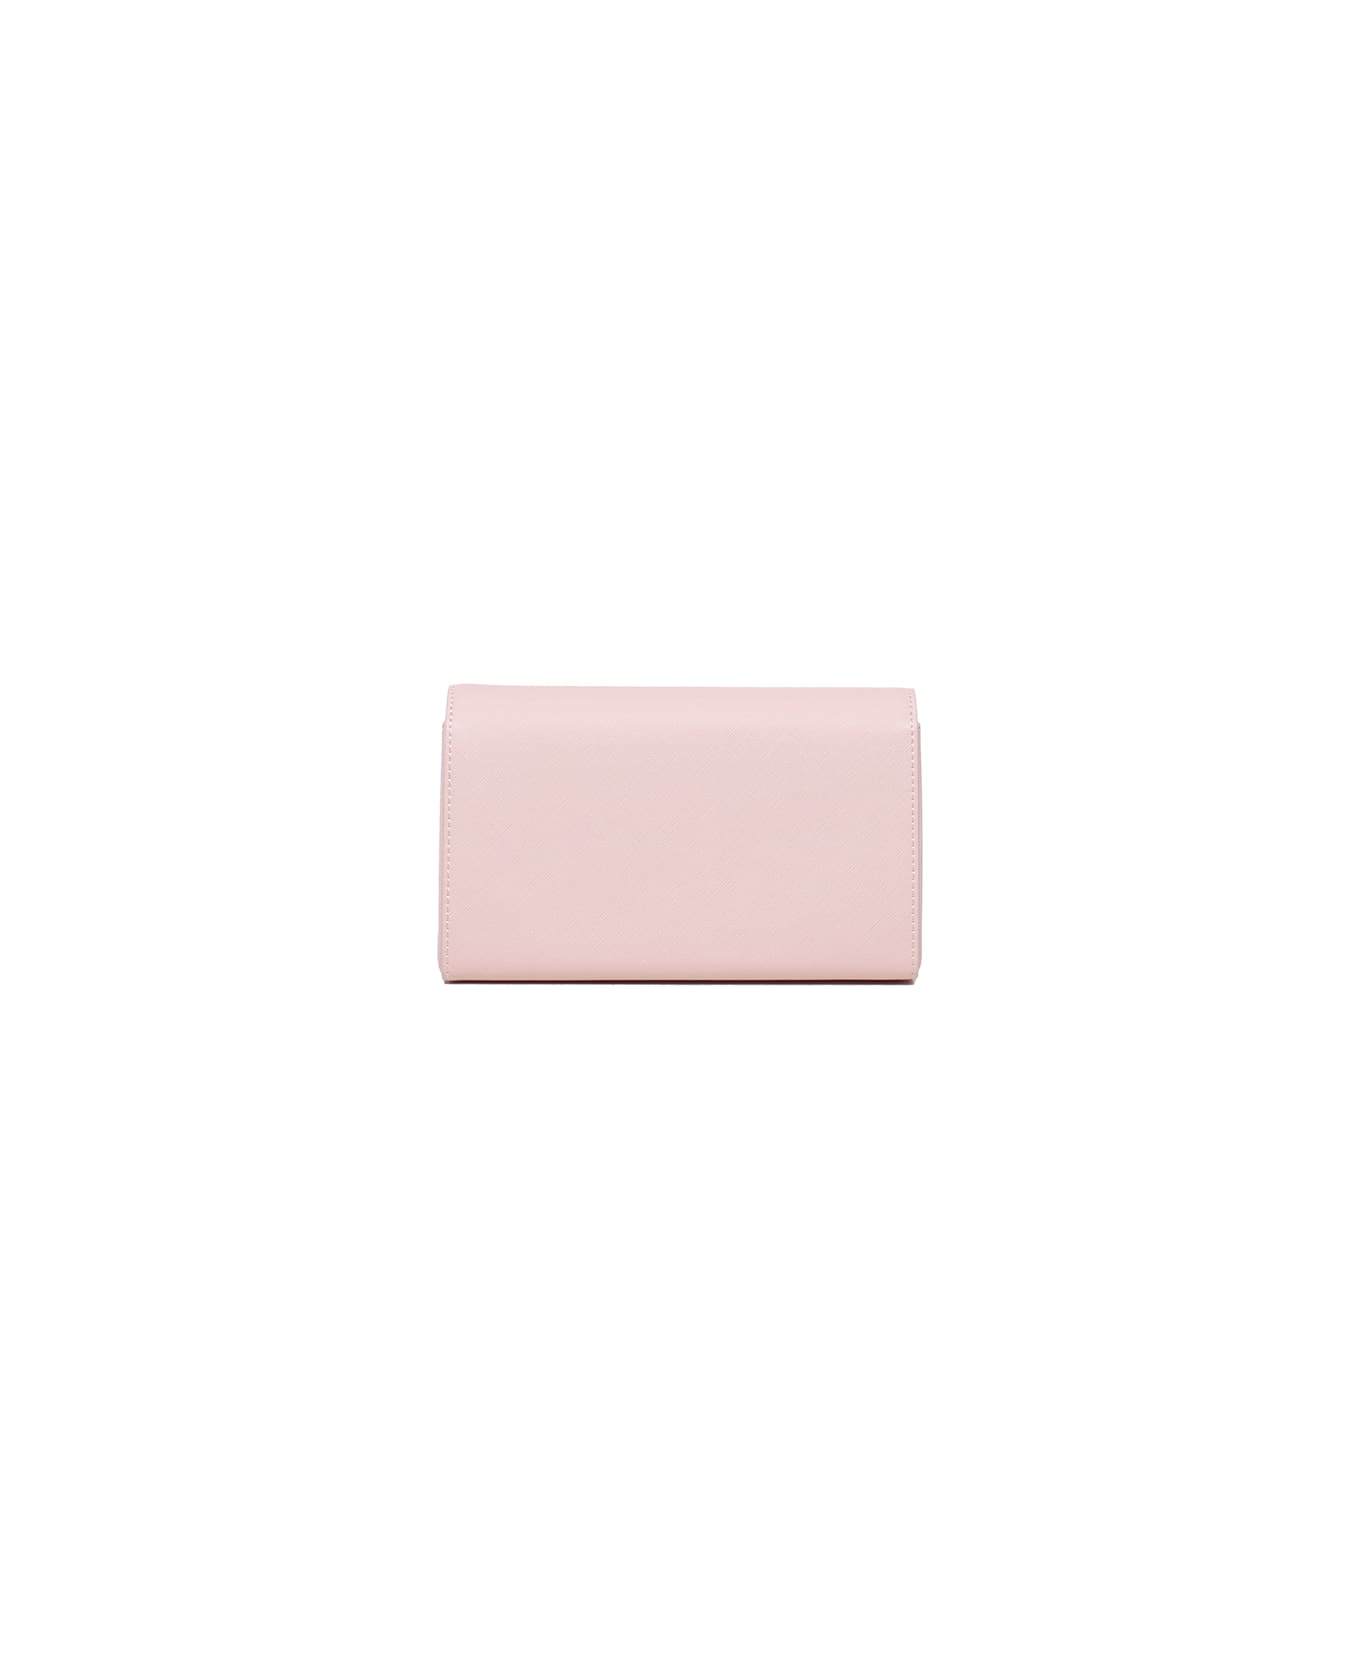 Love Moschino Smart Daily Shoulder Bag - Pink ショルダーバッグ